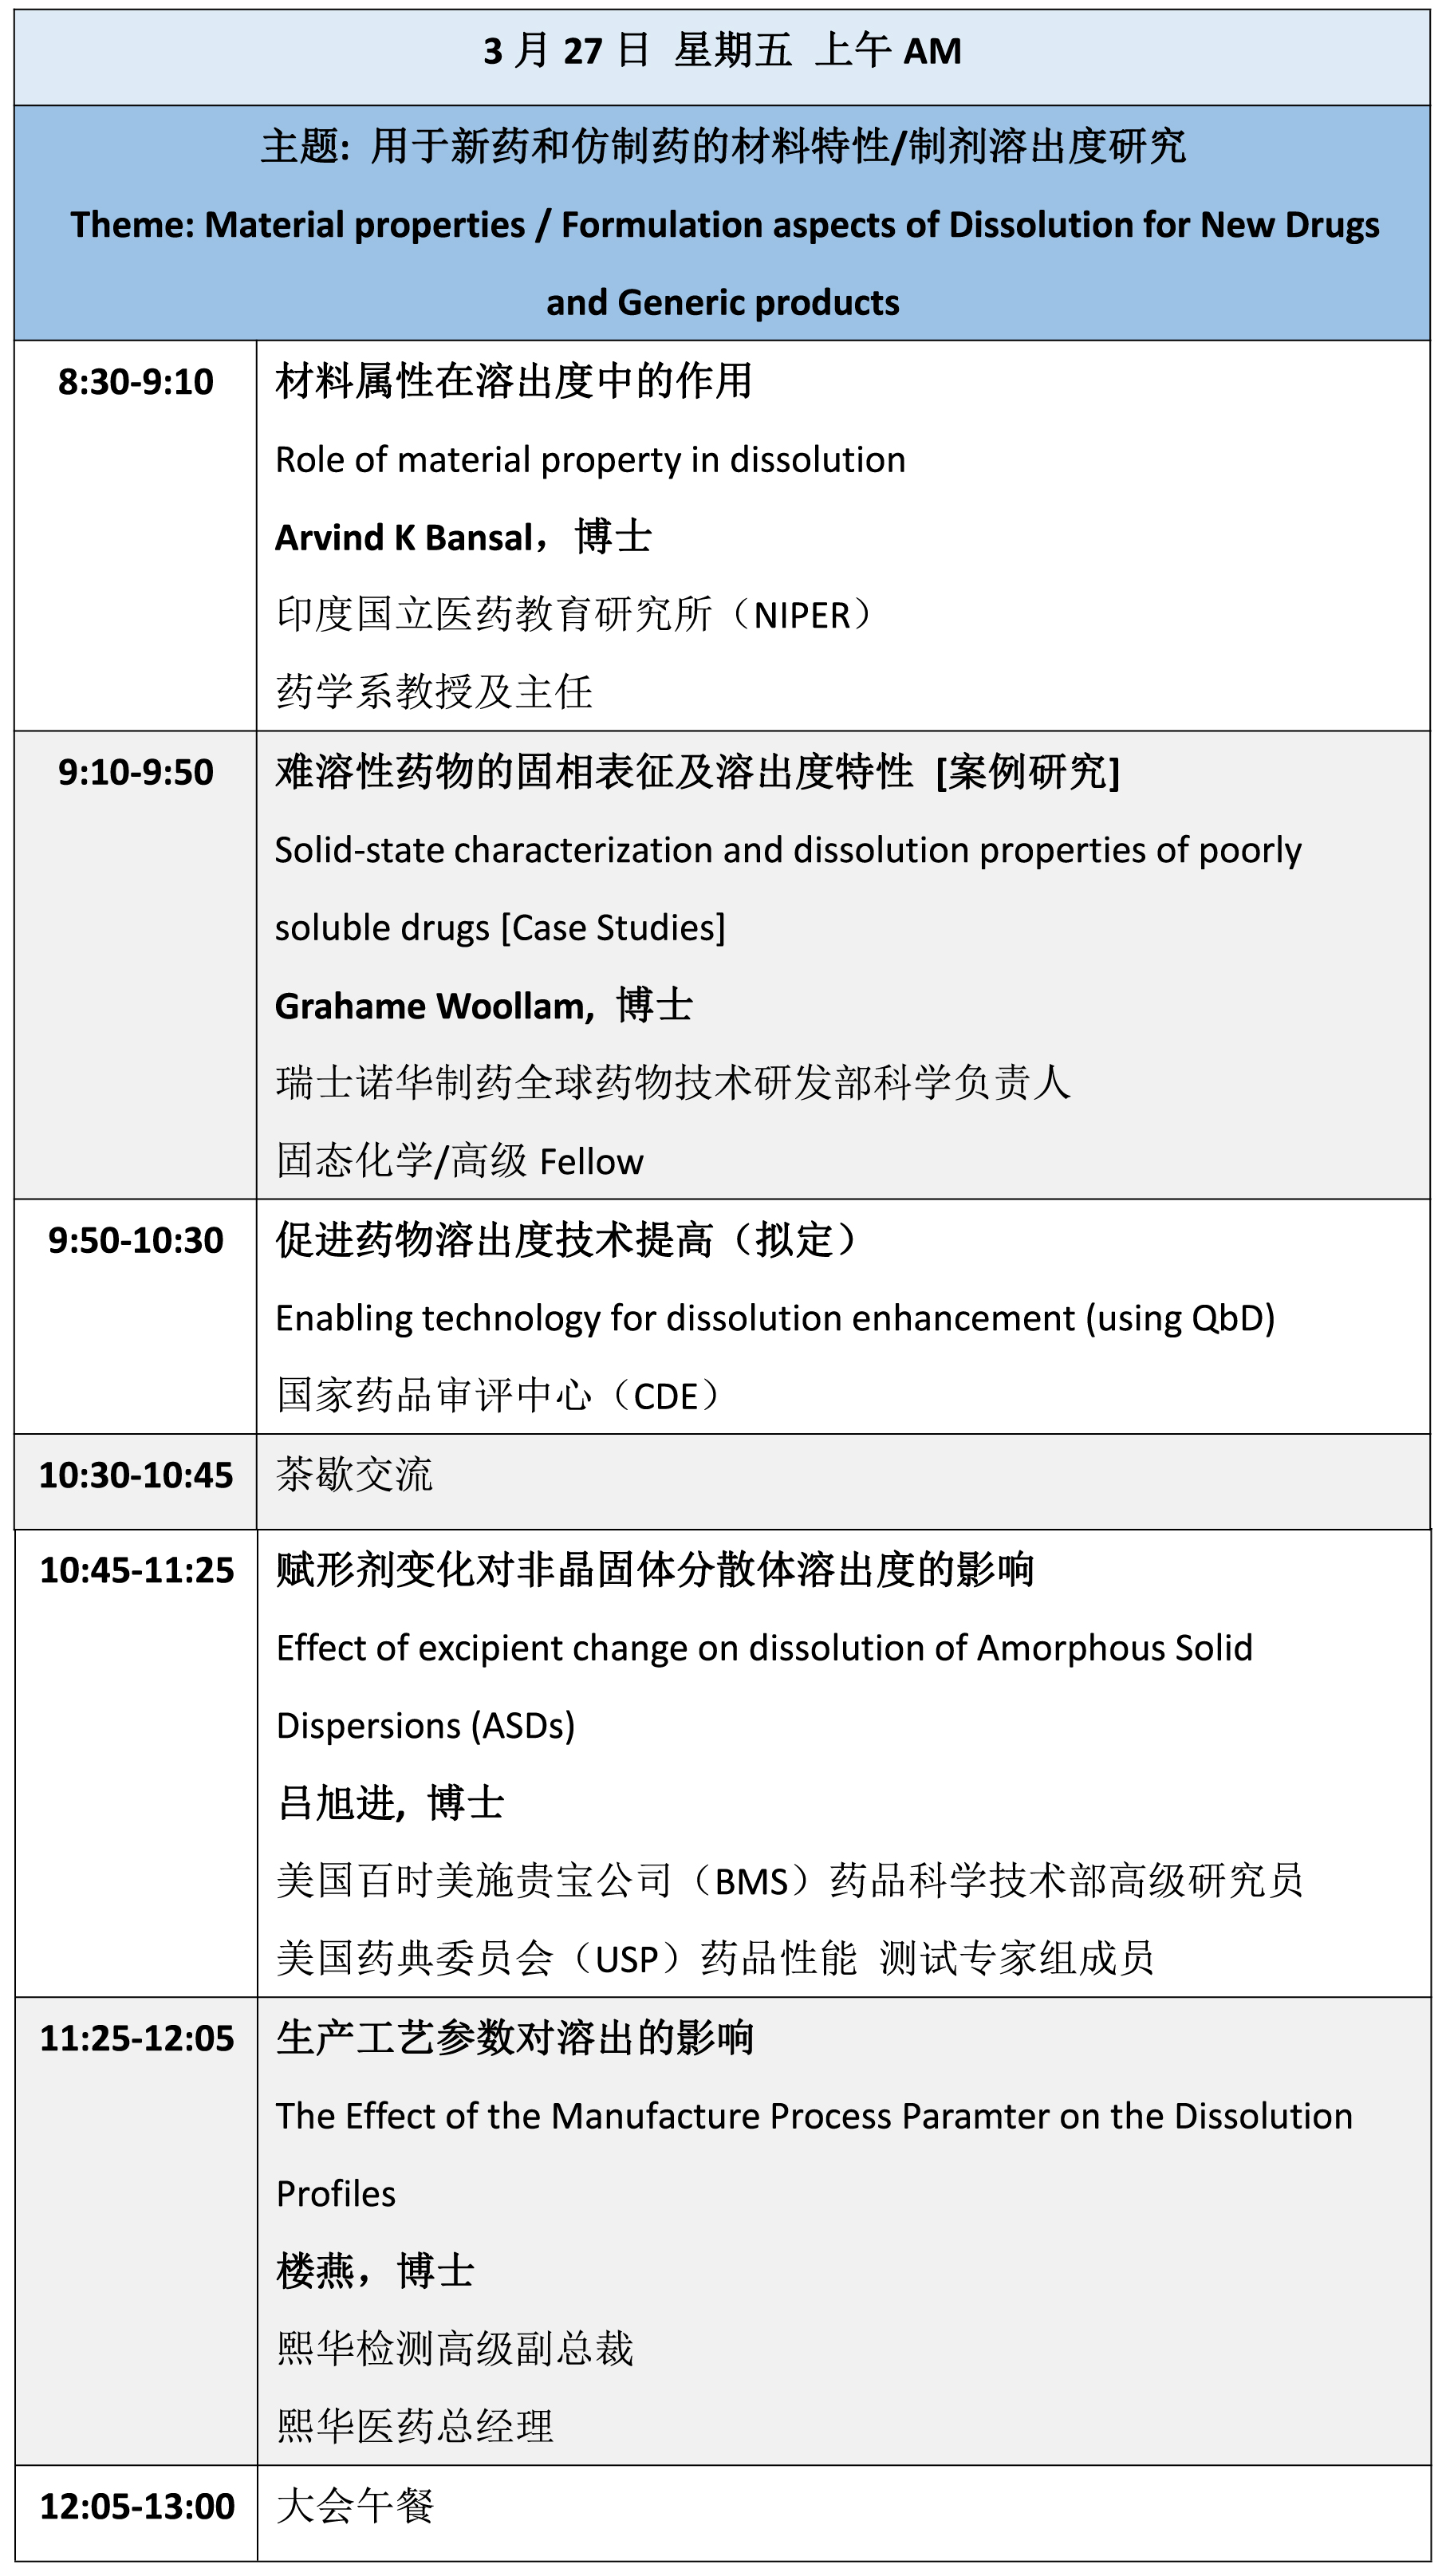 Disso China 2020 国际学术研讨会（南京）